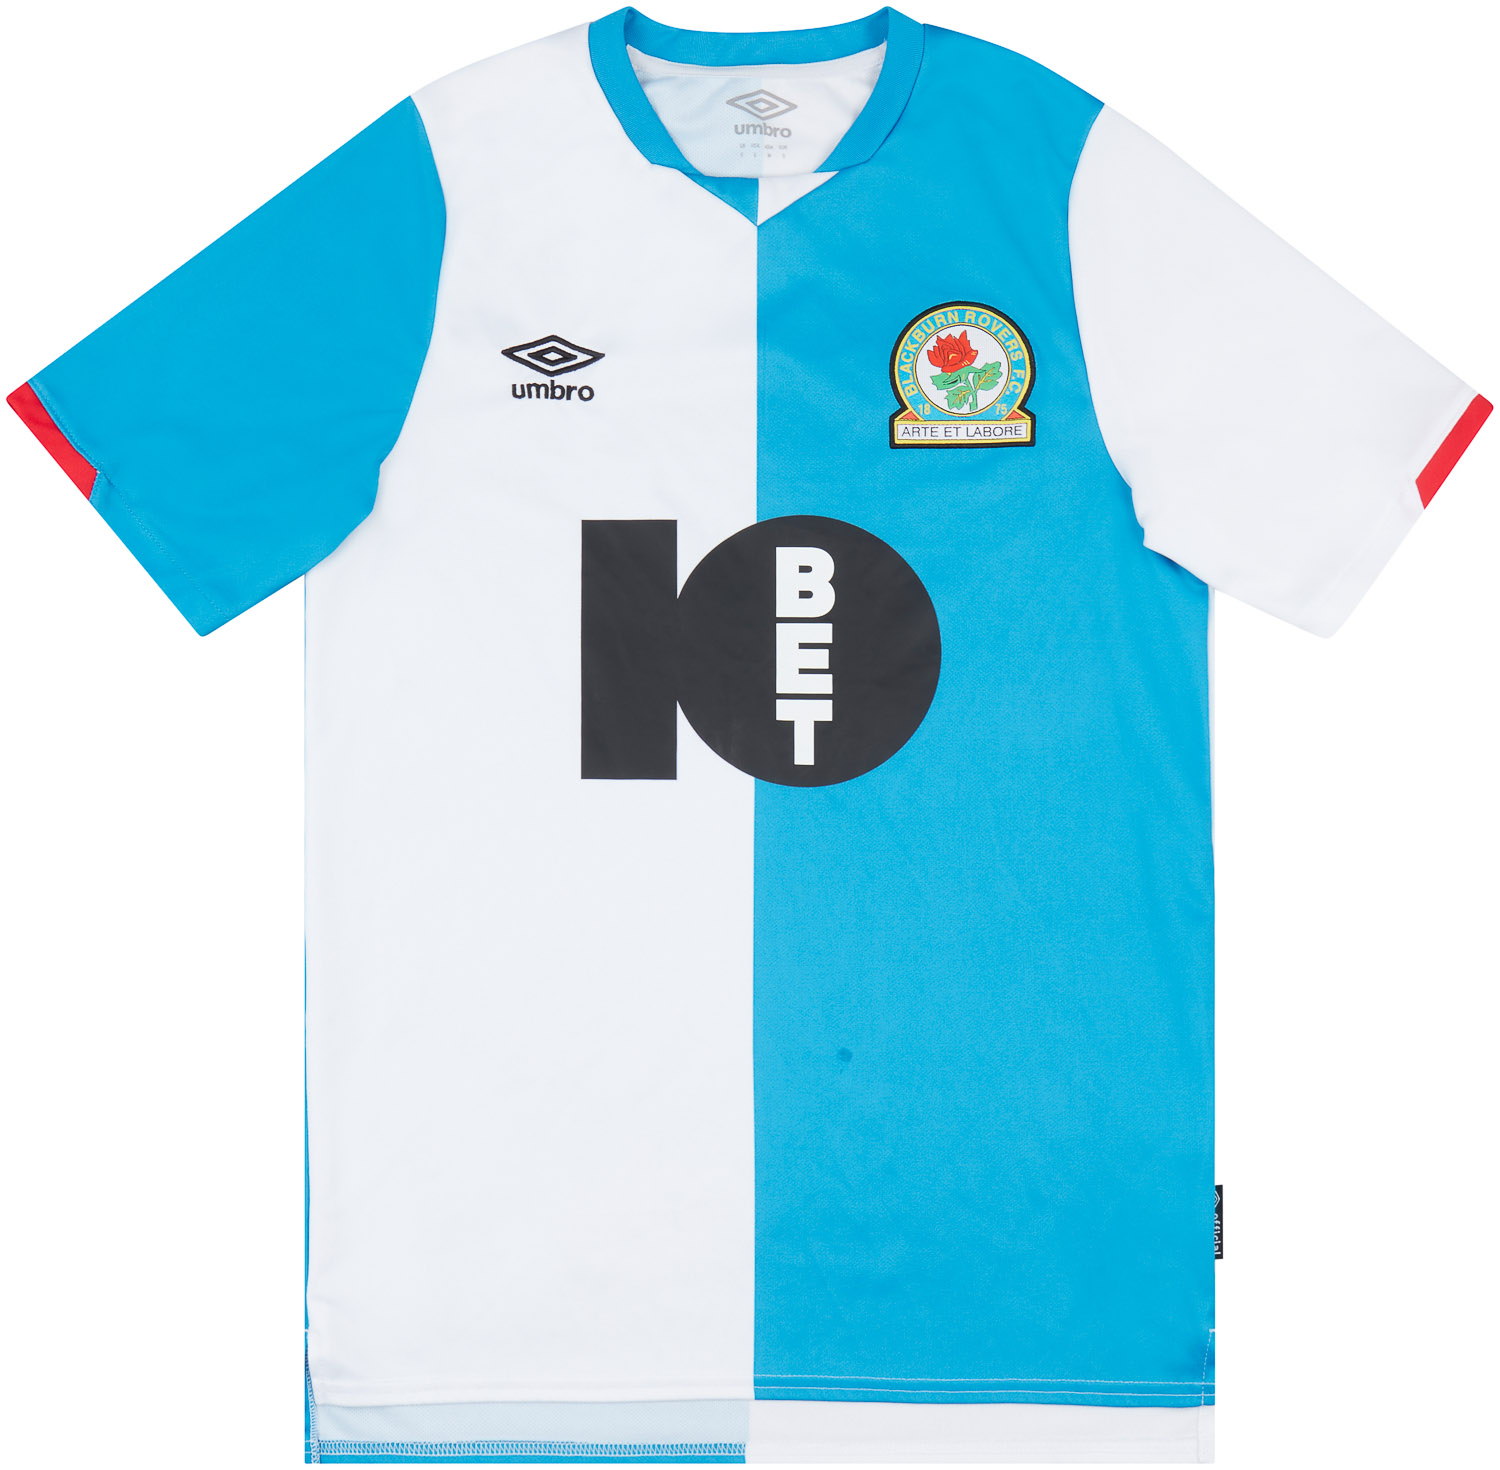 Blackburn Rovers  home футболка (Original)